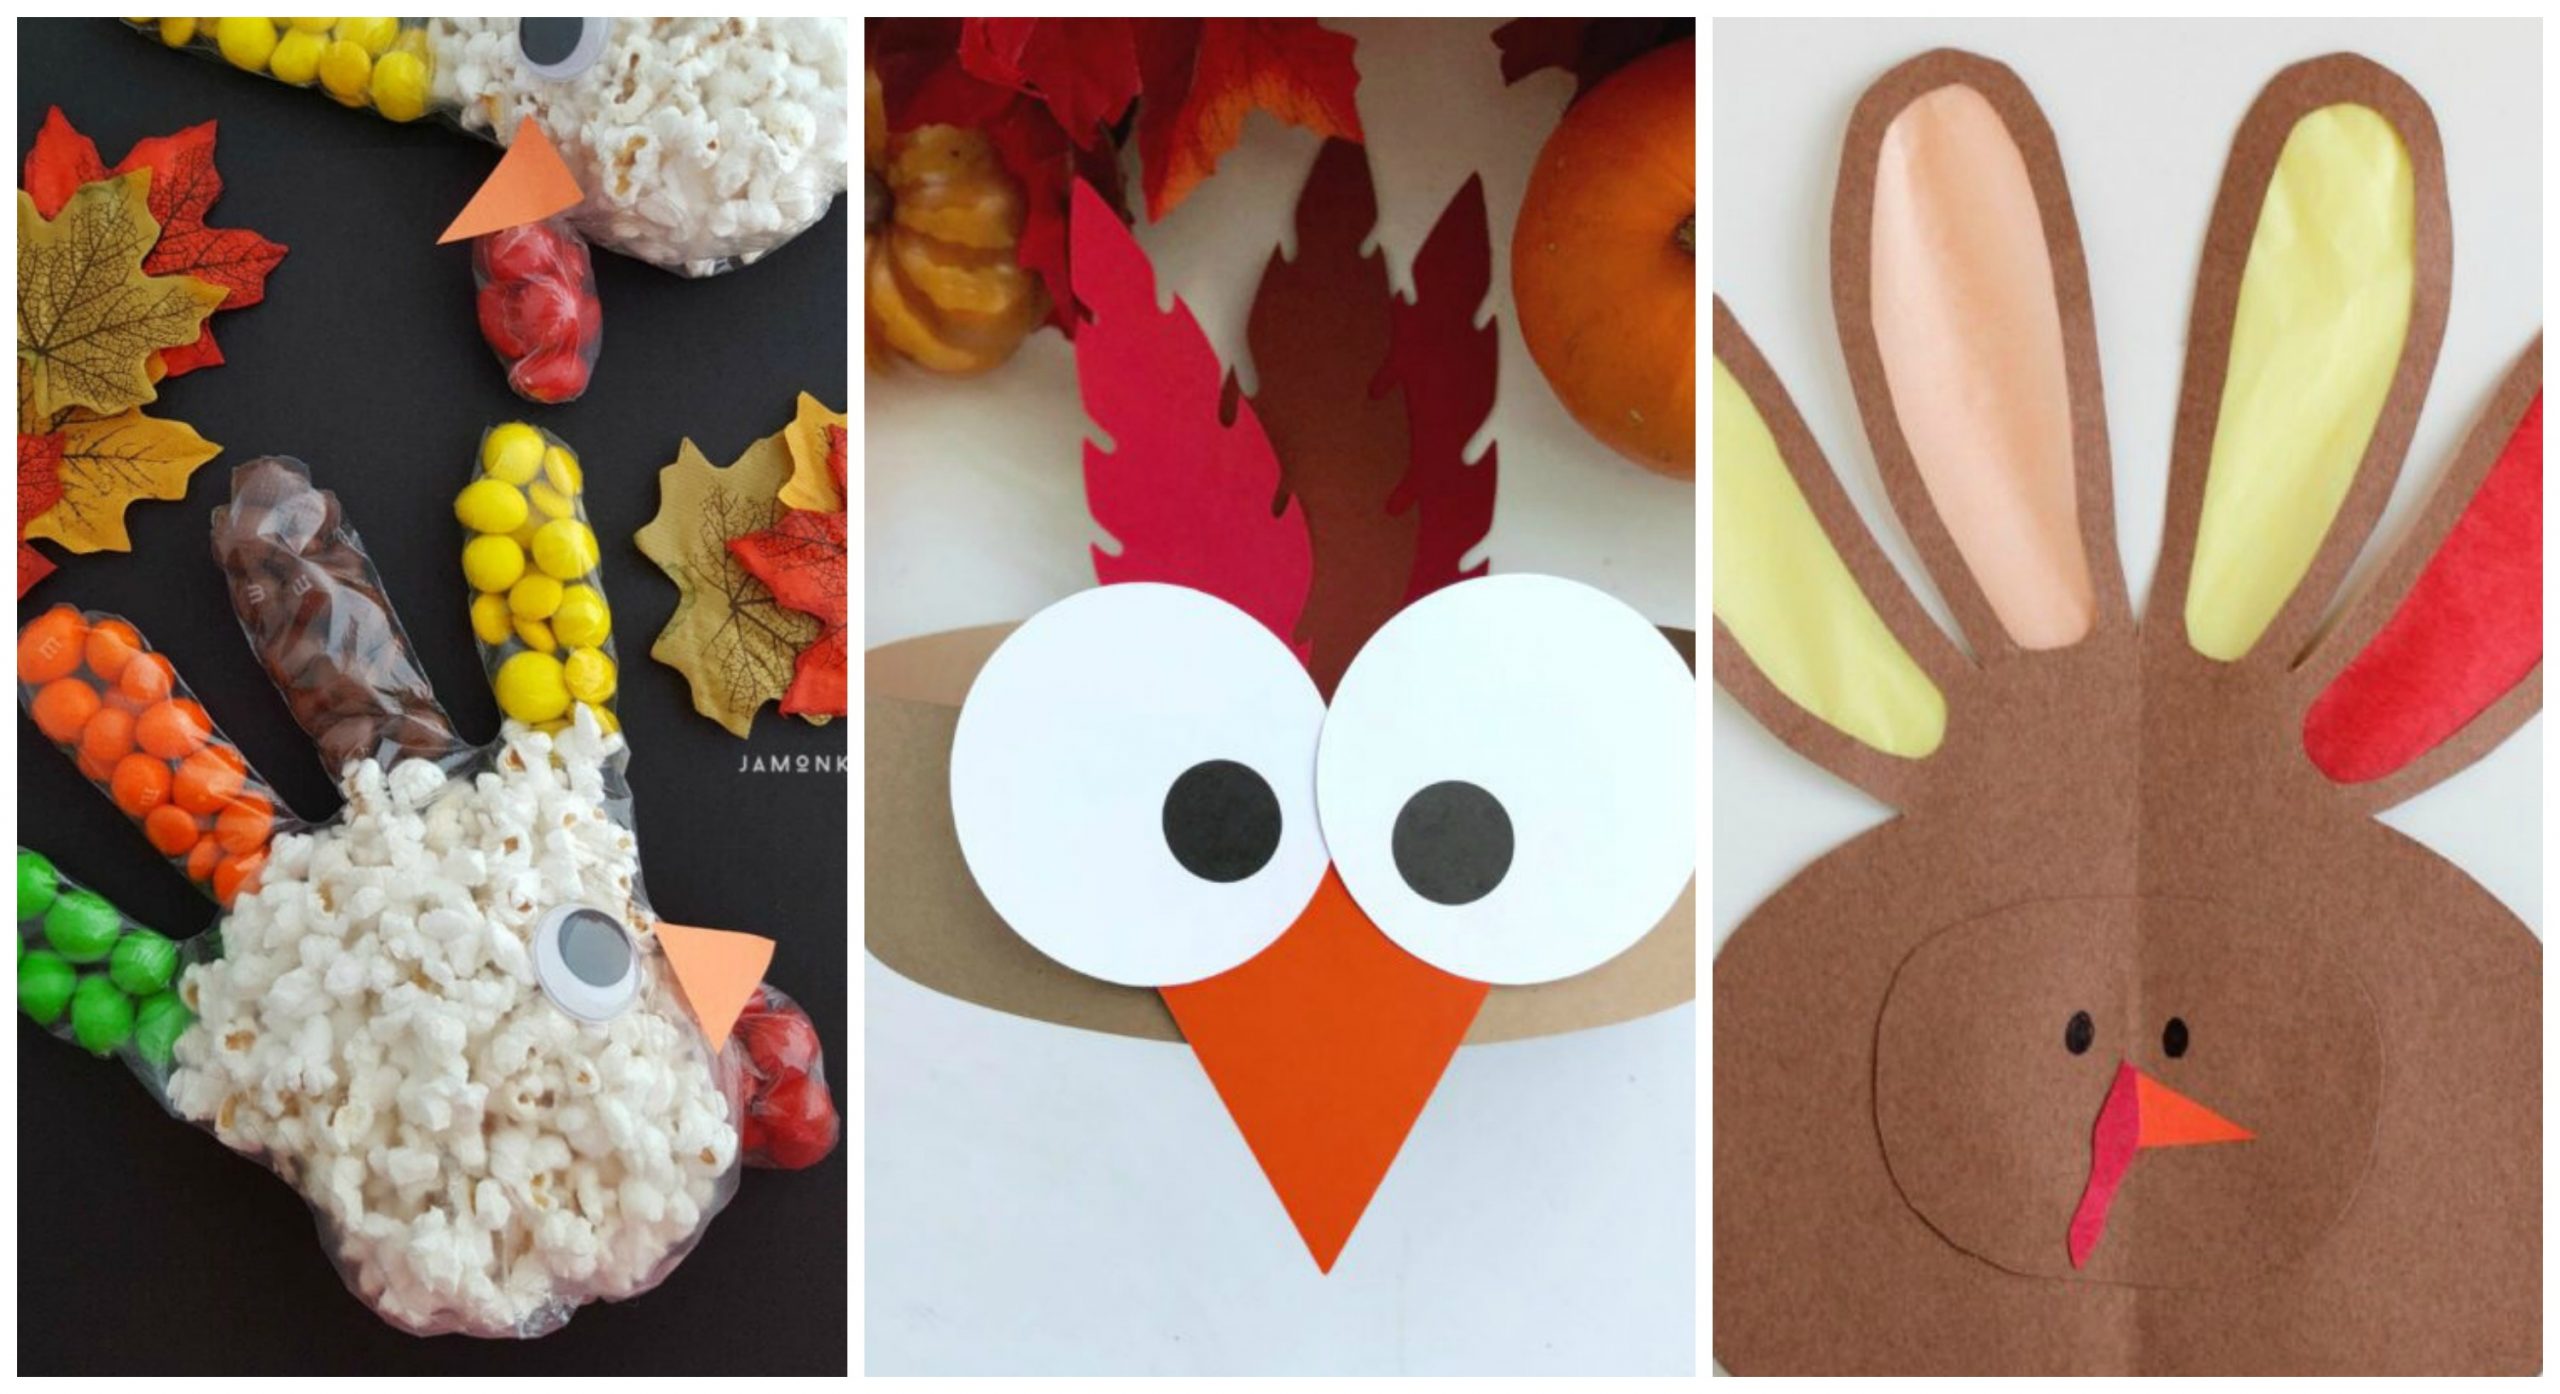 printable turkey crafts for kids